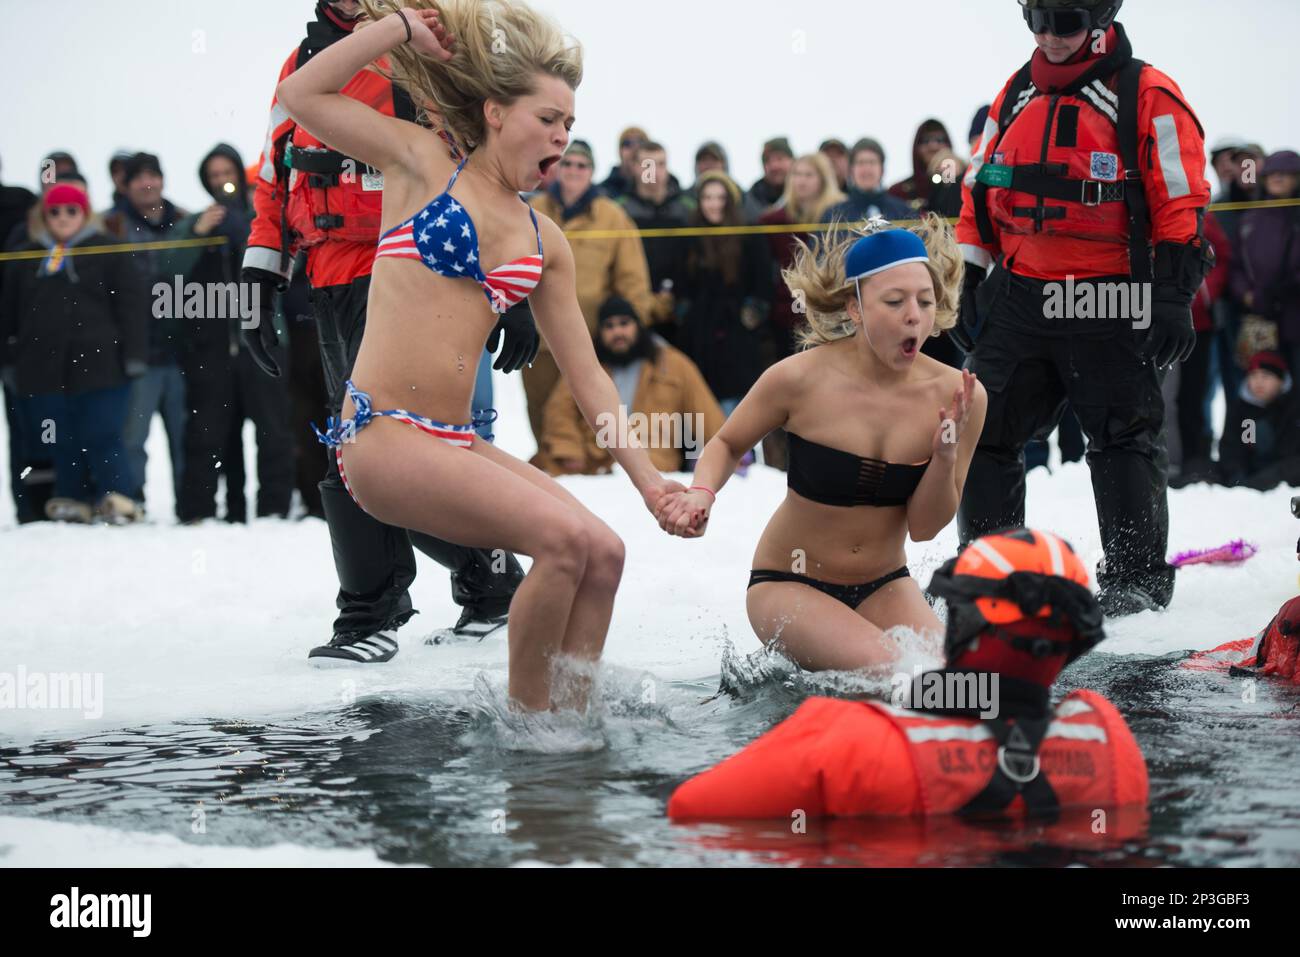 In this photo taken Saturday, Feb. 7, 2015, two women jump through a